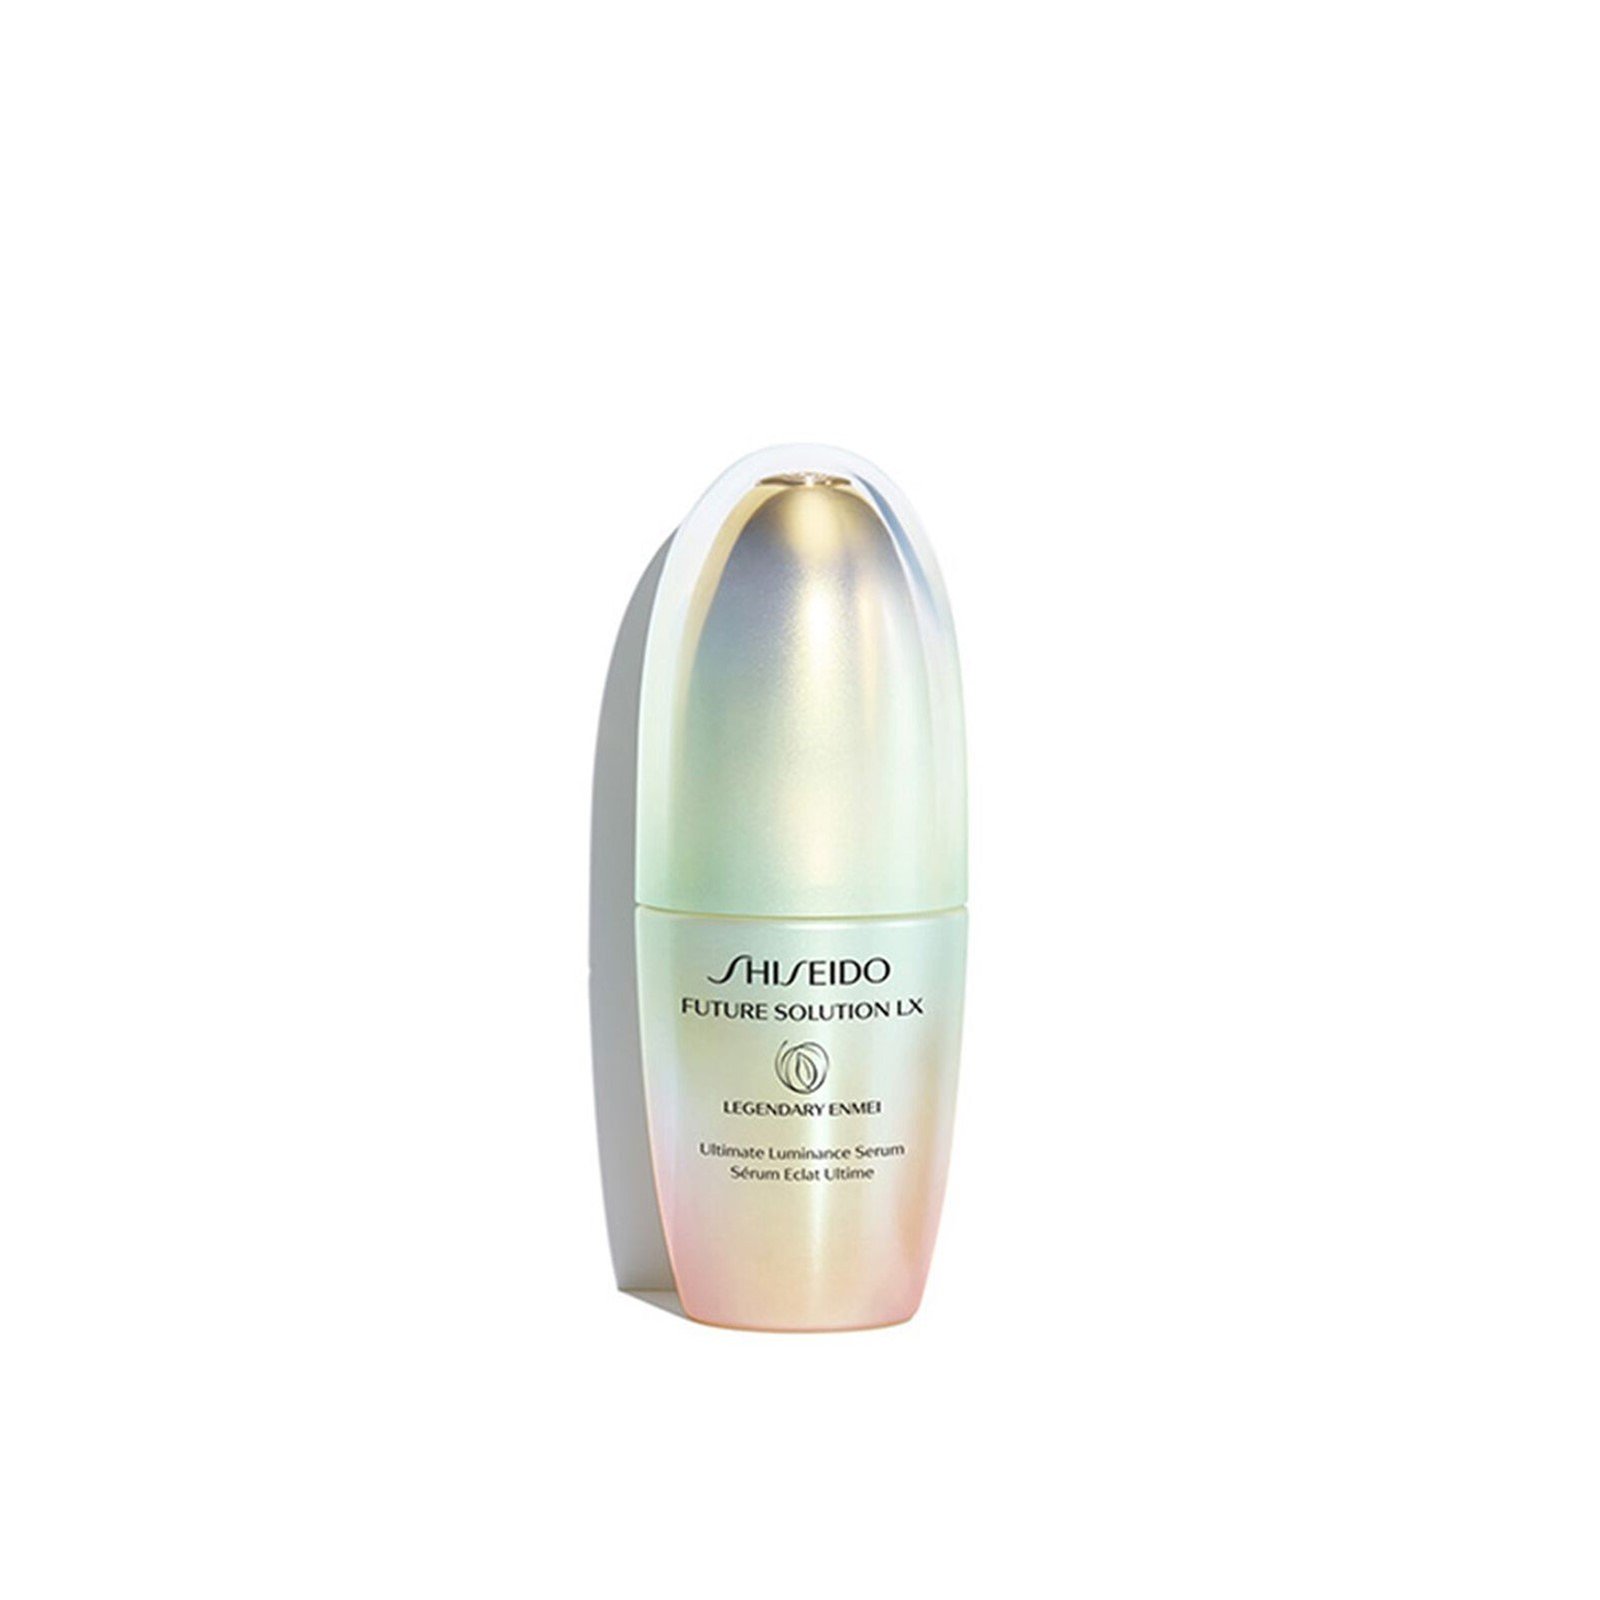 Shiseido Future Solution LX Legendary Enmei Ultimate Luminance Serum 30ml